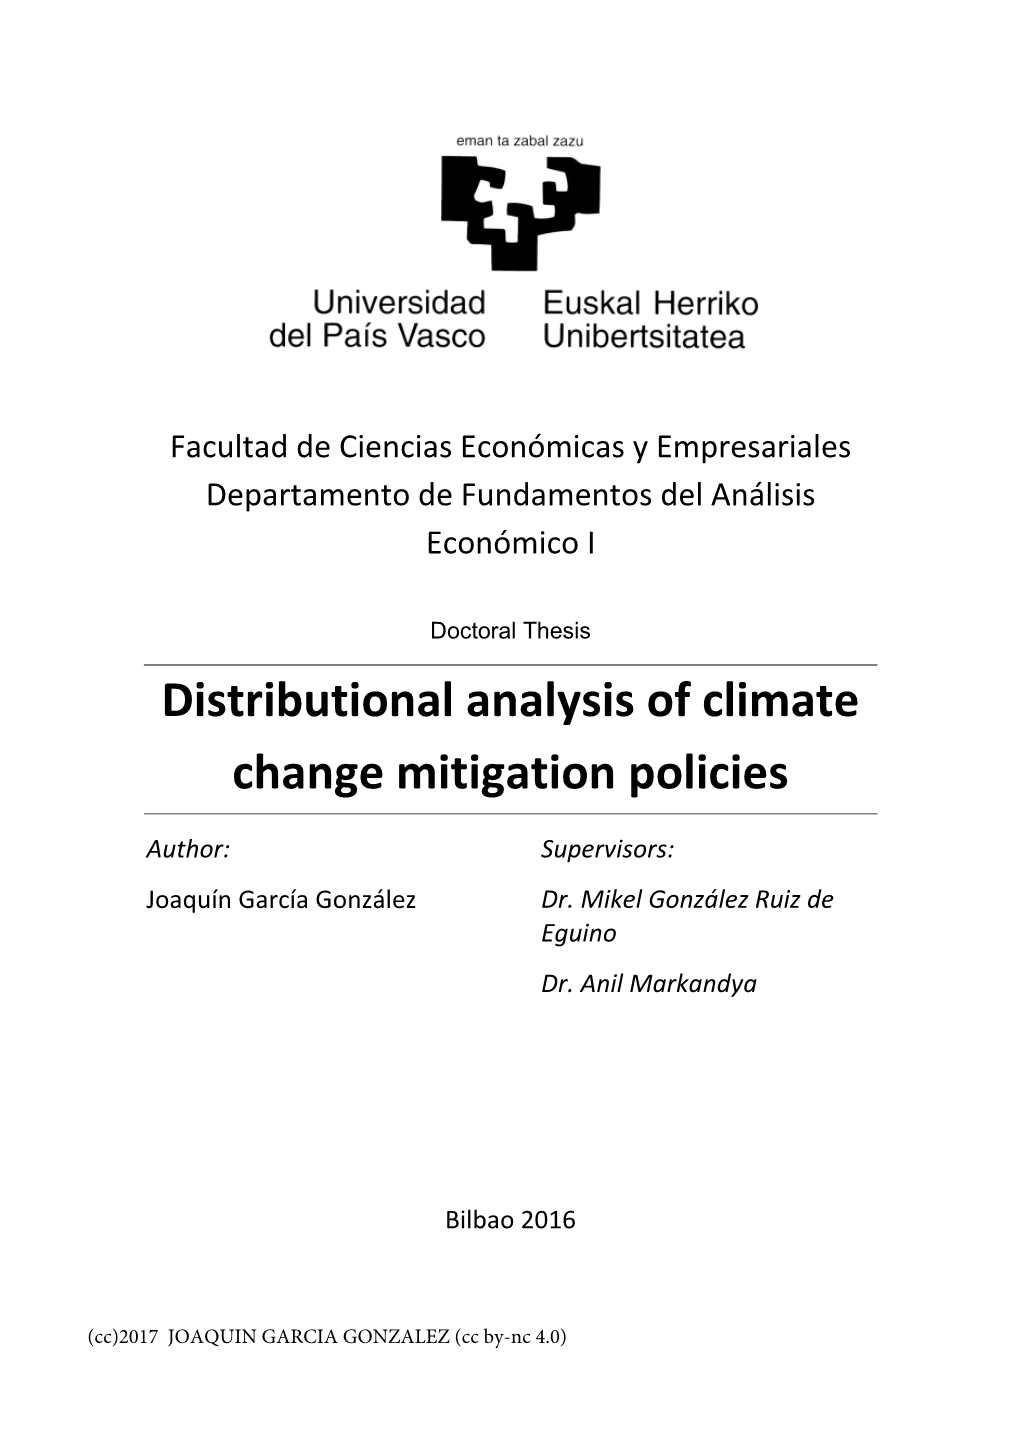 Distributional Analysis of Climate Change Mitigation Policies